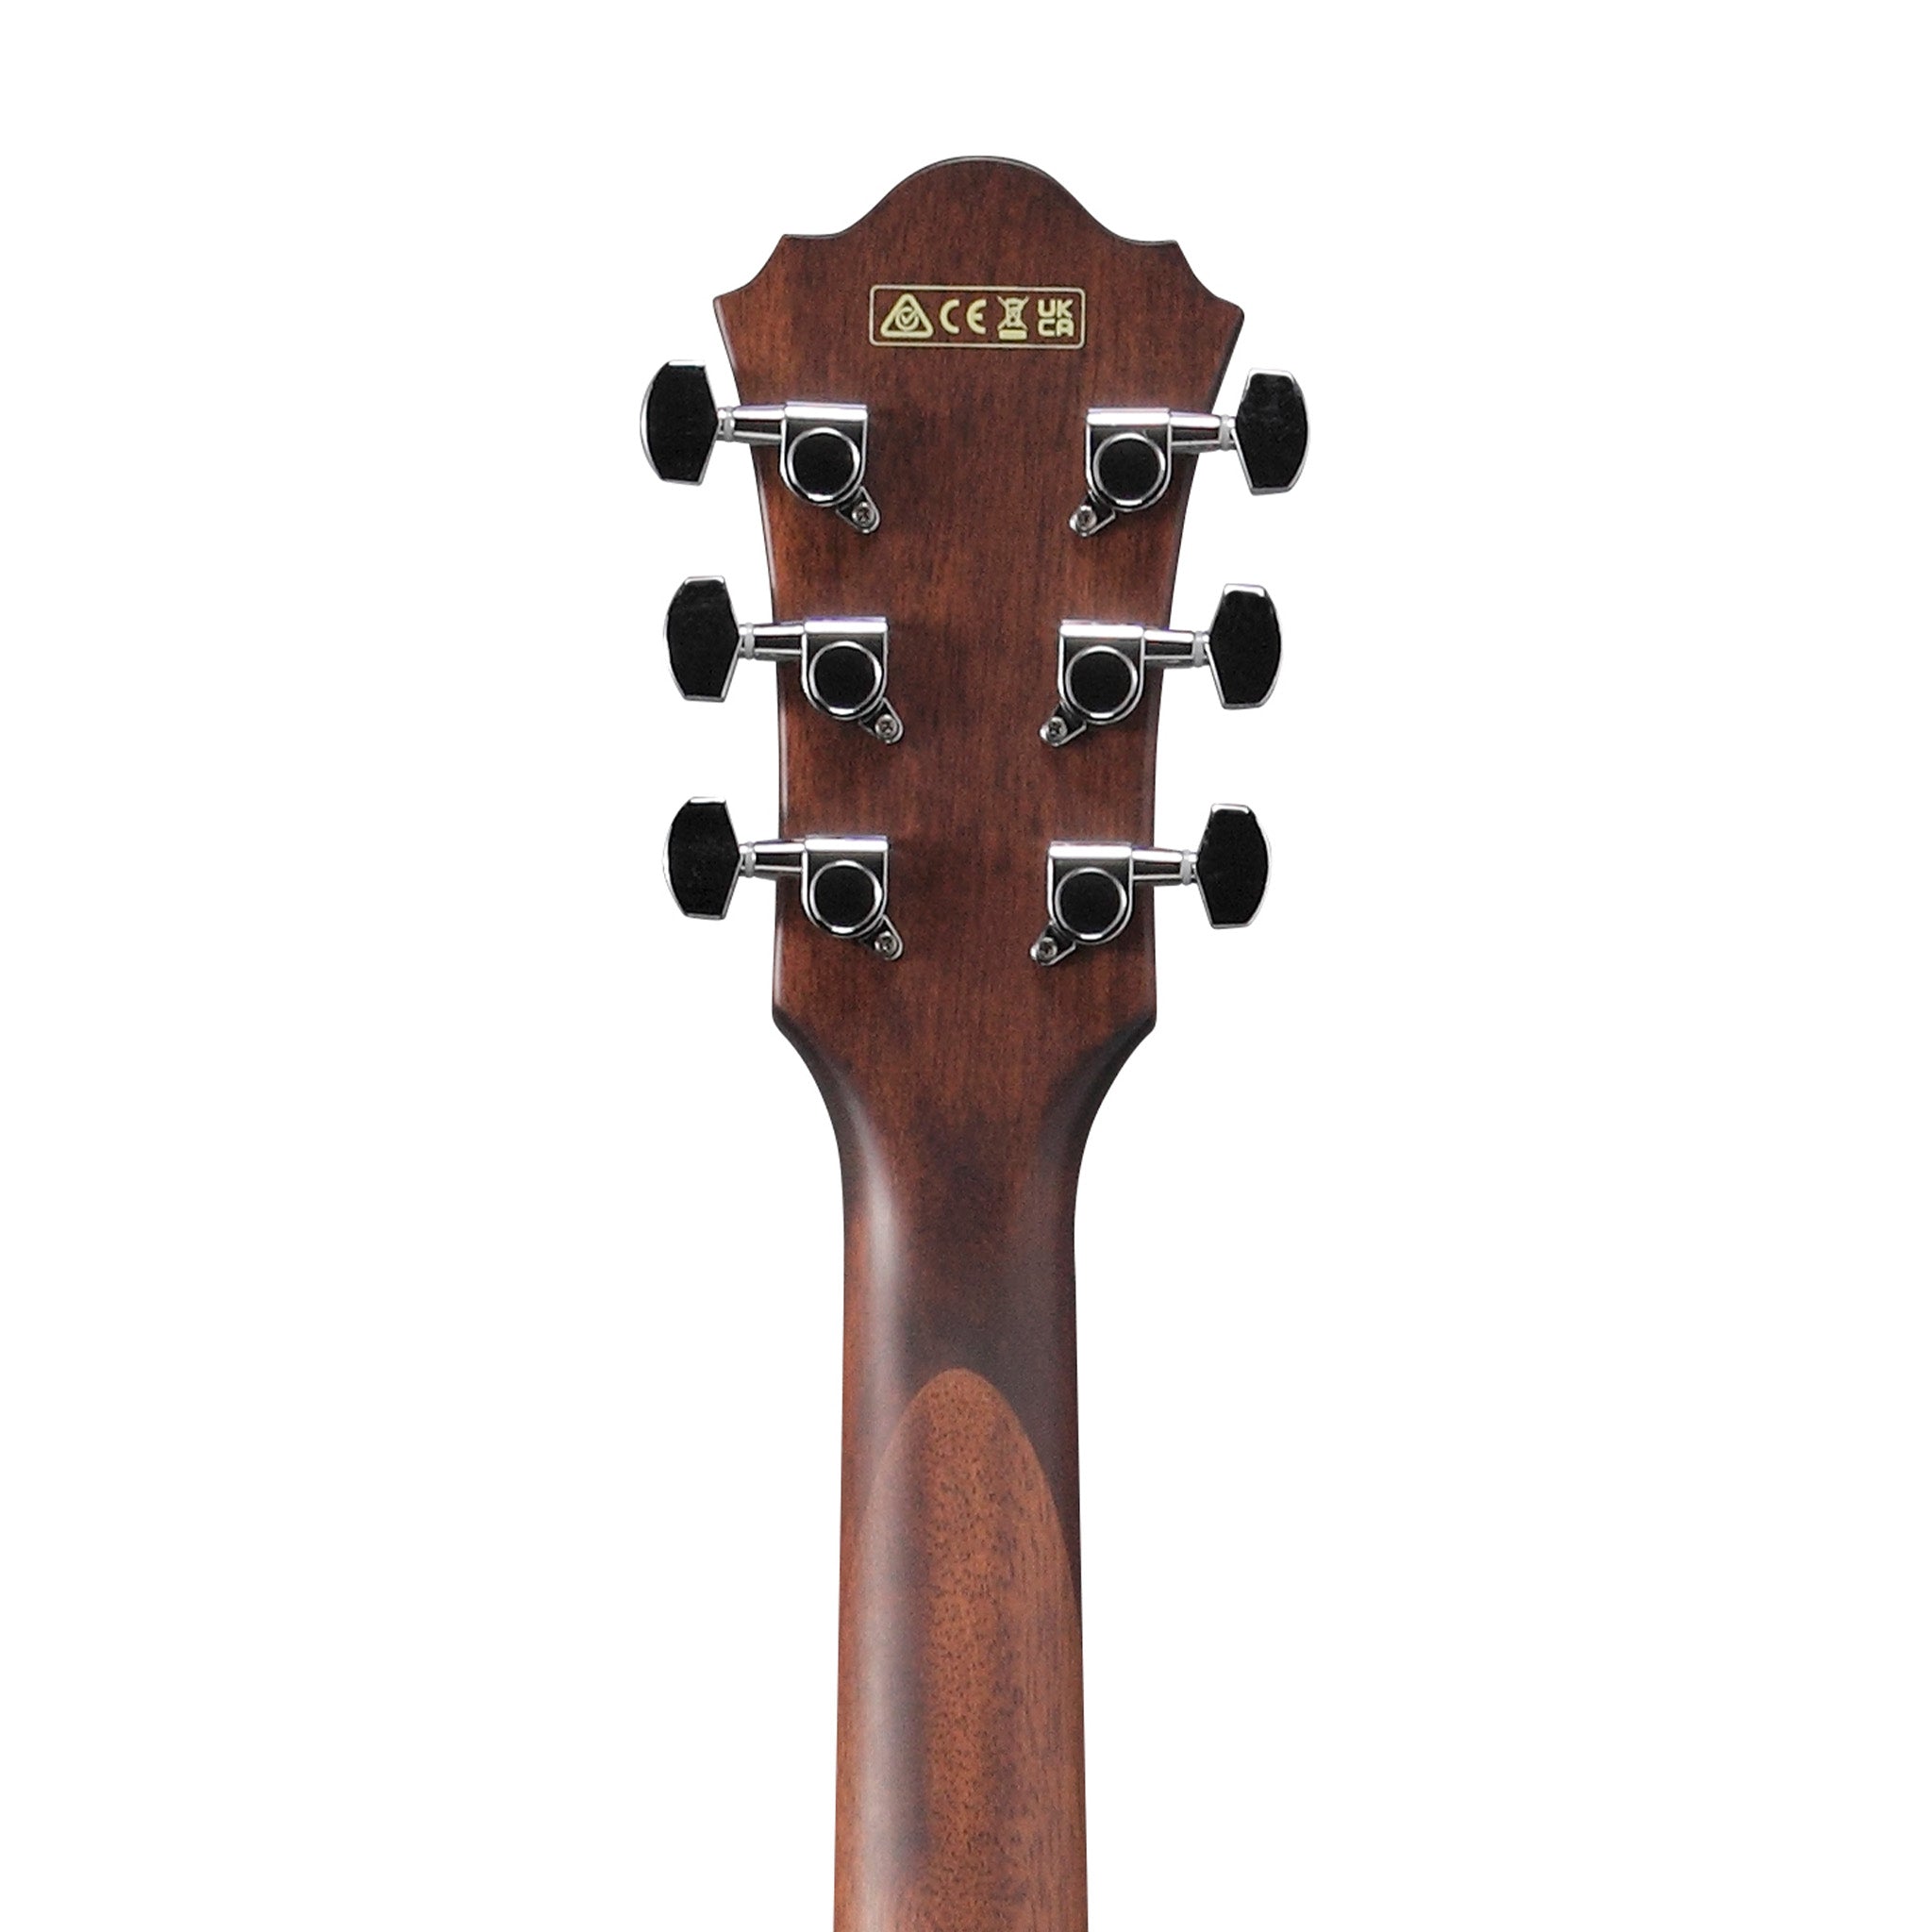 Ibanez AE100-BUF Acoustic Guitar, Burgundy Flat